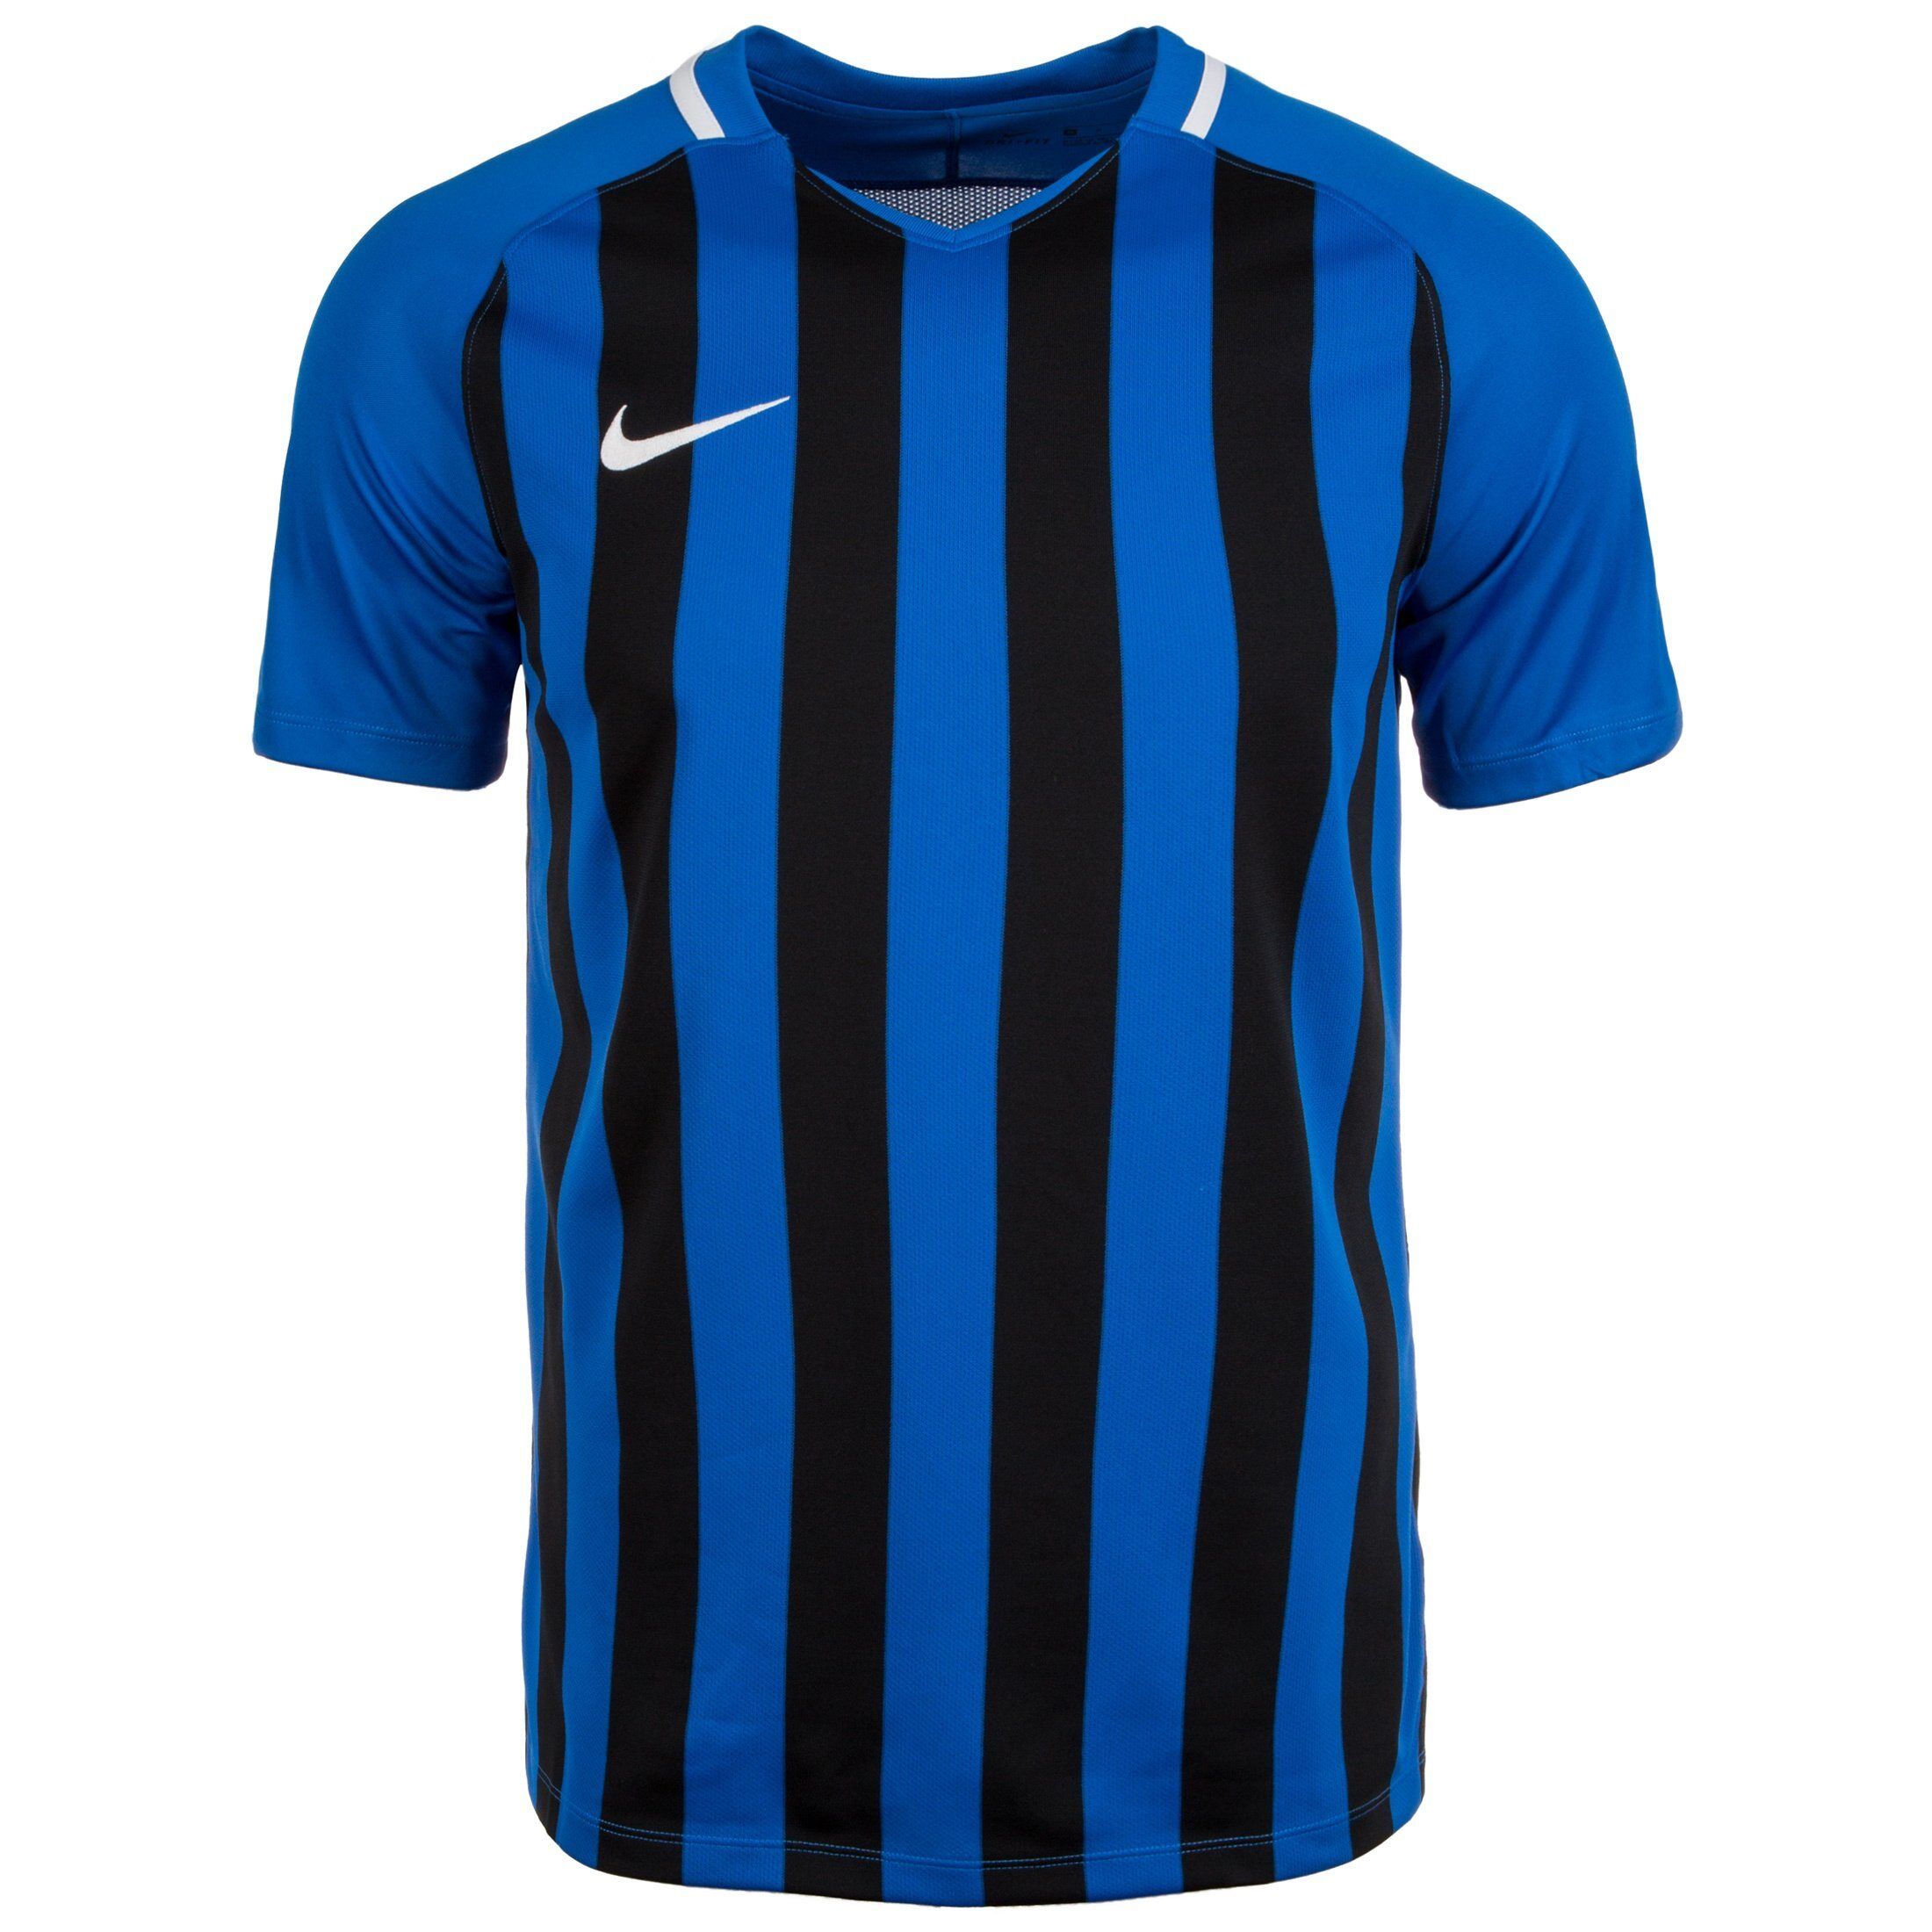 Nike Fußballtrikot »Striped Division Iii«, blau-schwarz